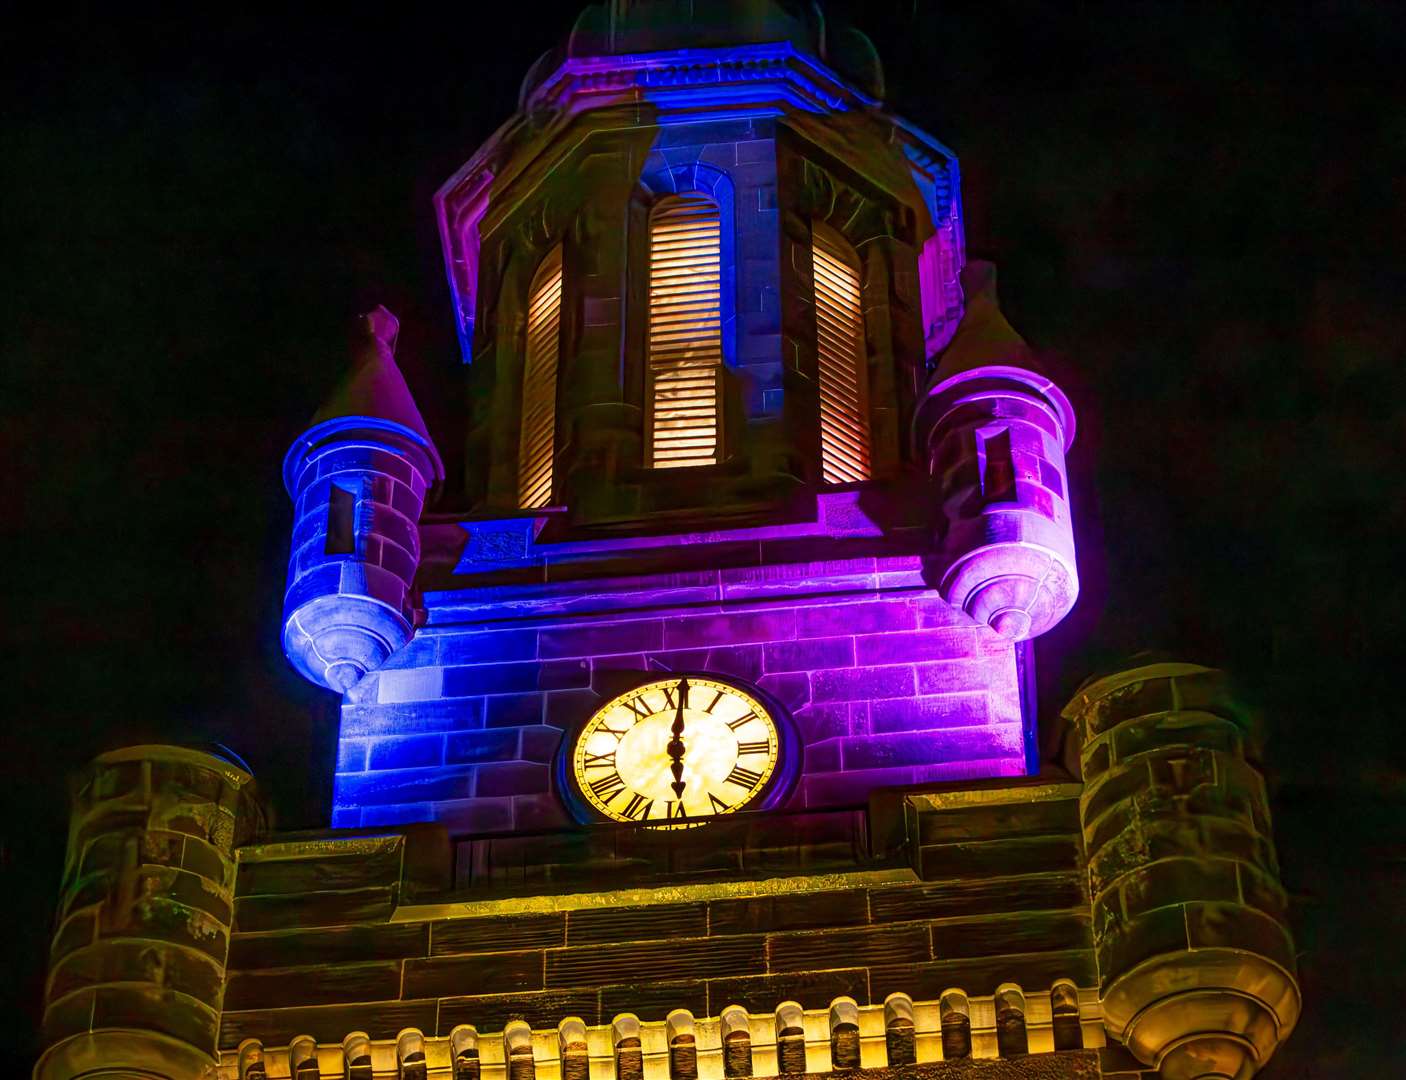 The illuminated clocktower.